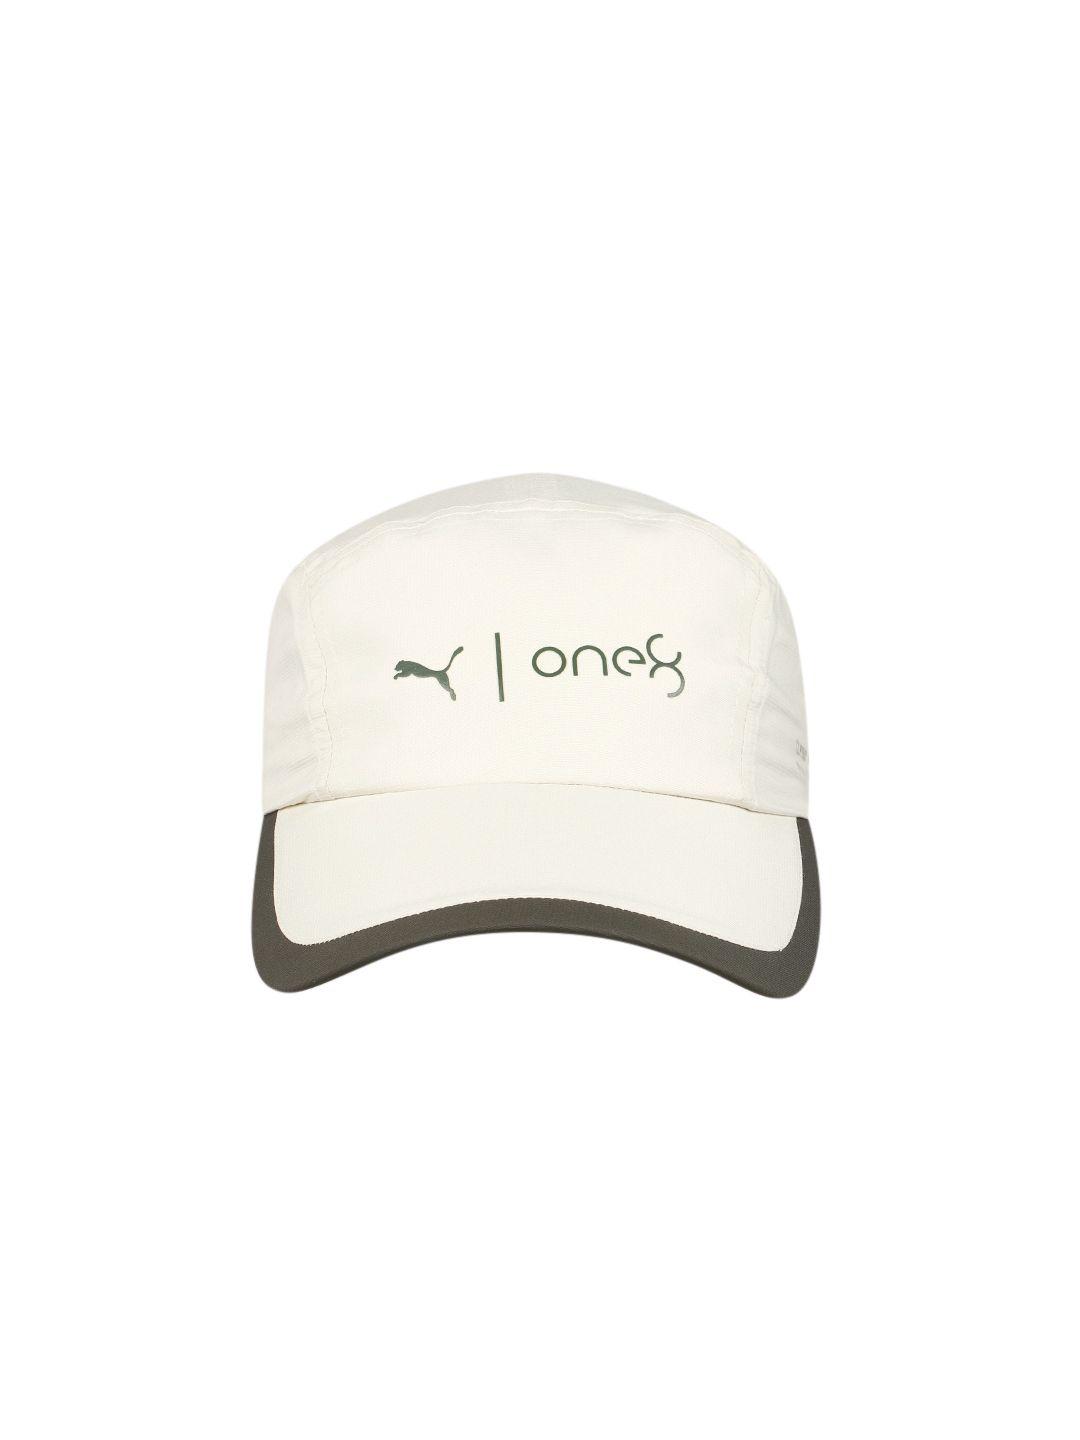 puma unisex 5 panel brand logo printed baseball cap